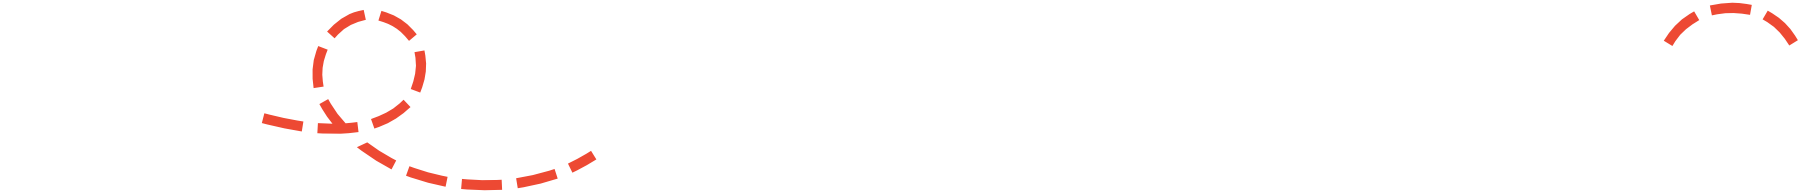 Porch My Paper Logo